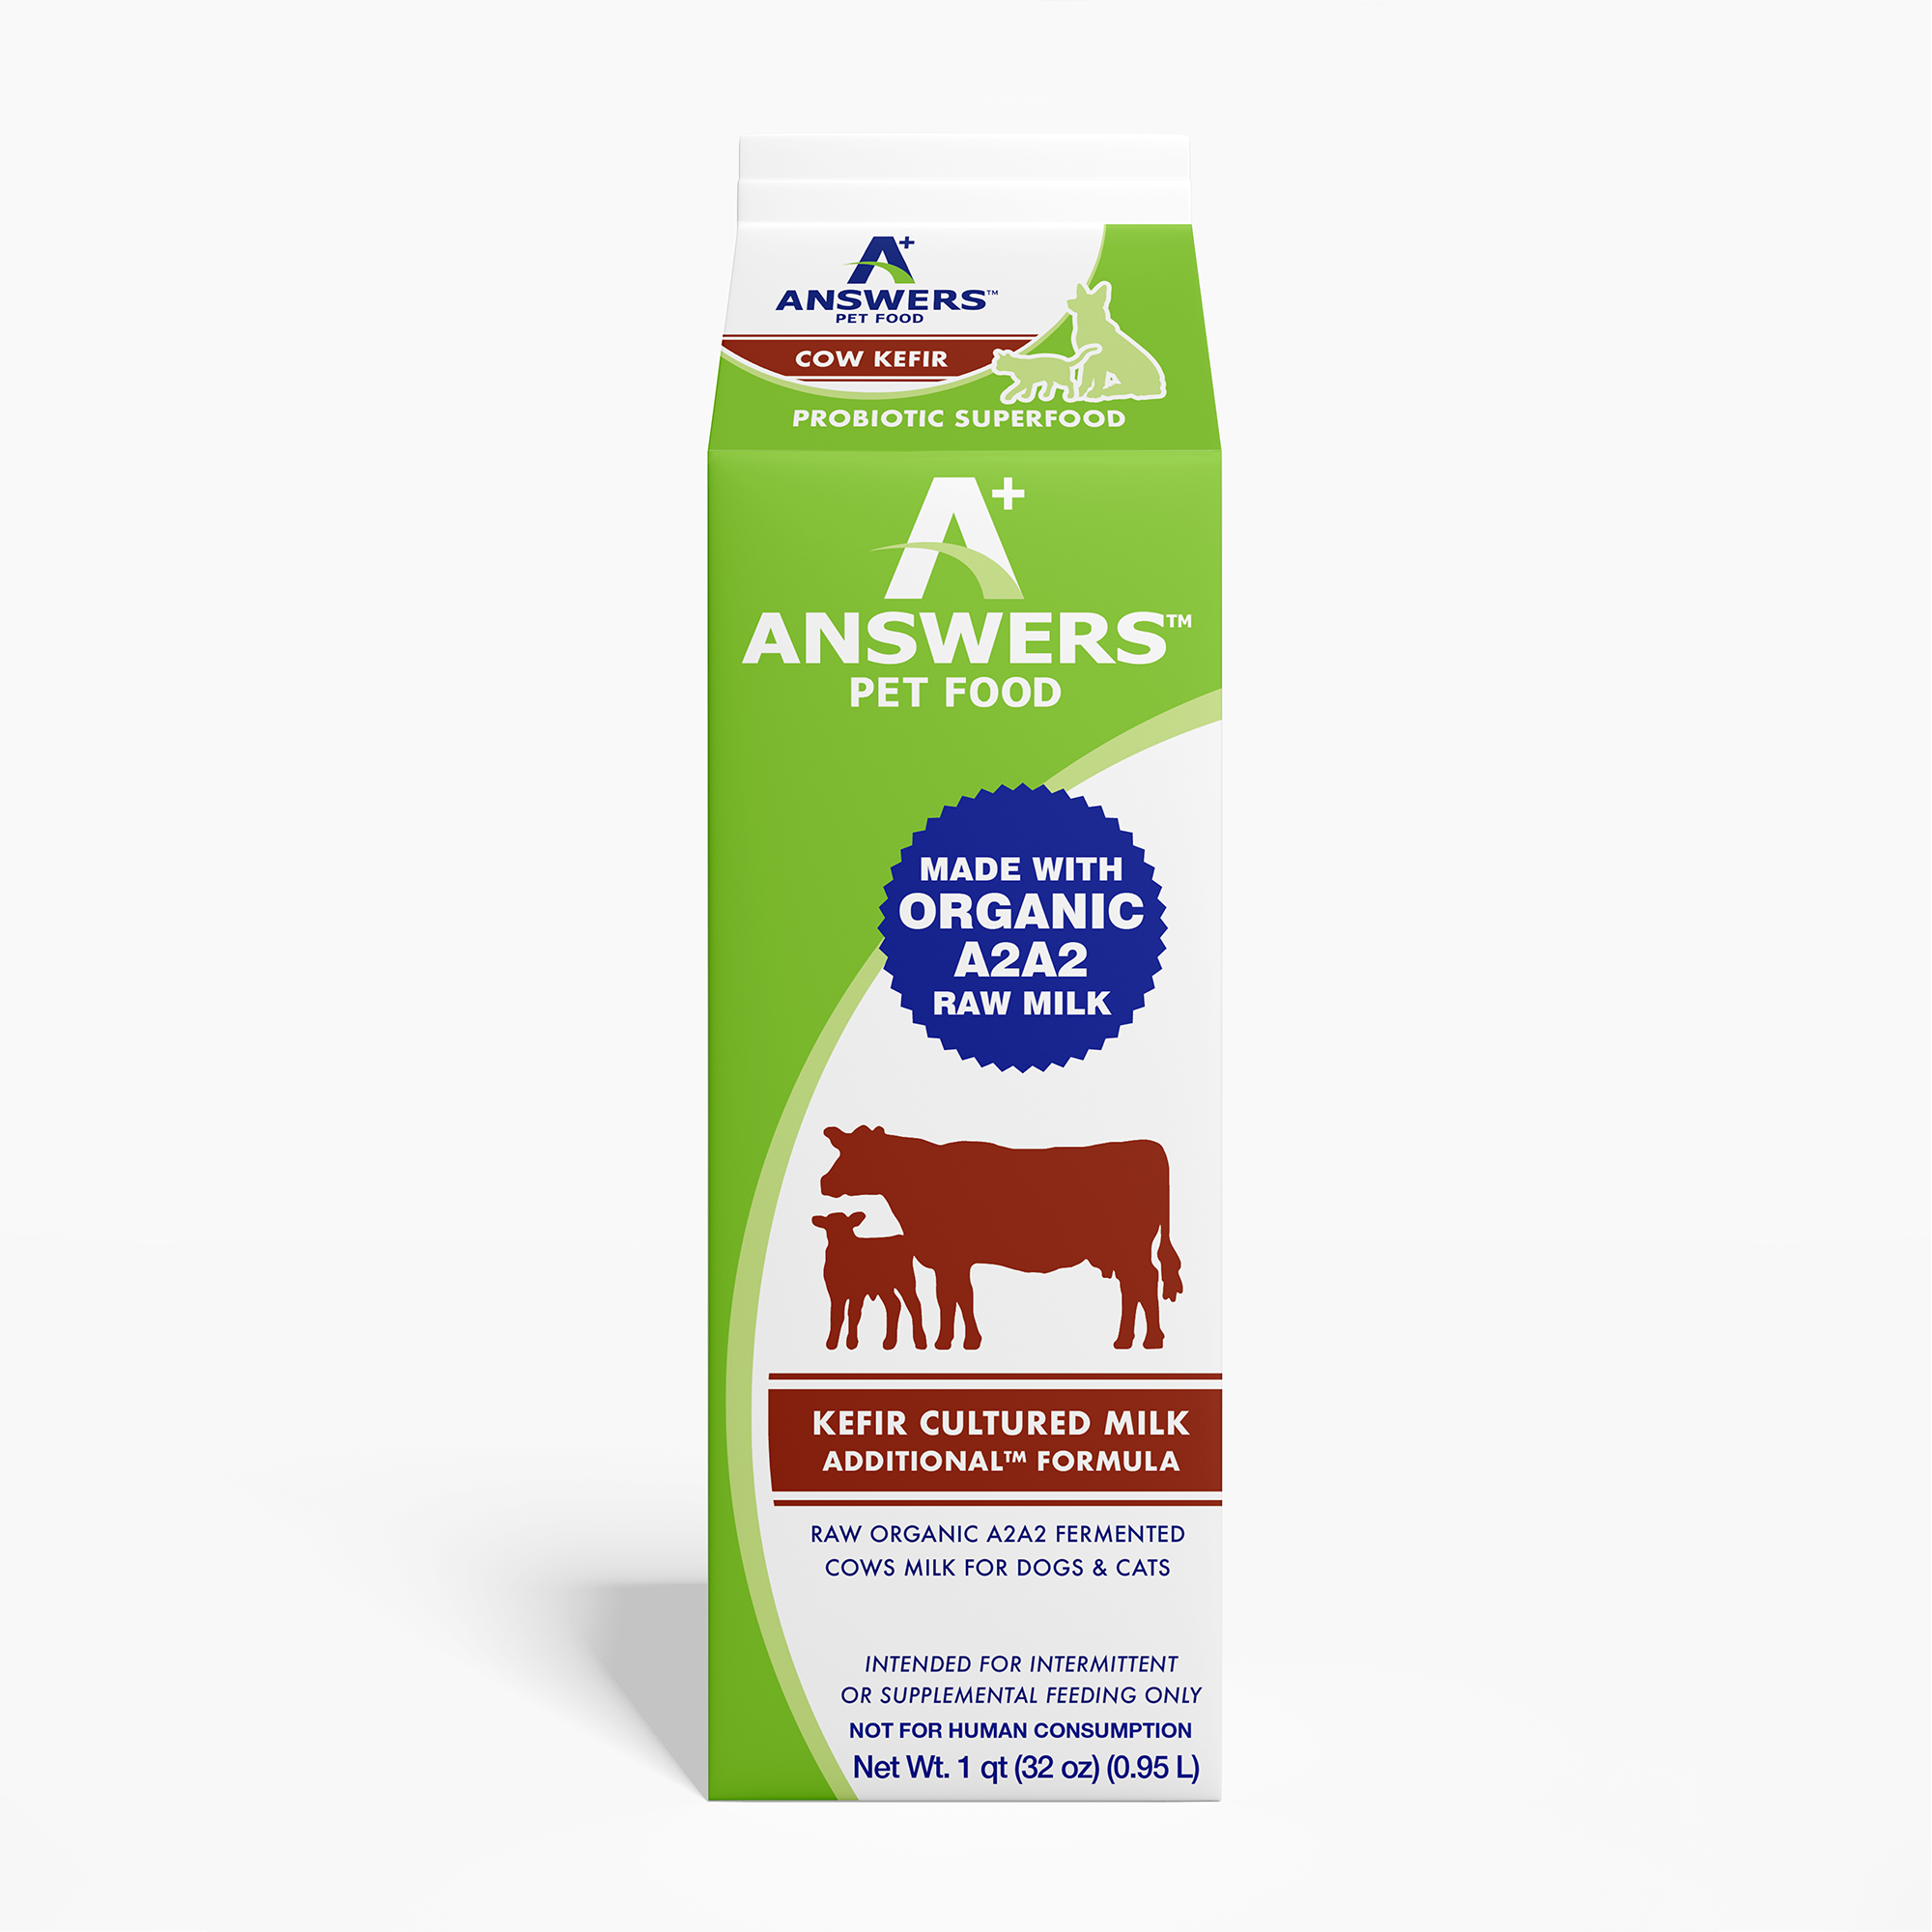 Additional Organic Raw Cow Milk Kefir - North Carolina, Texas, and Vermont